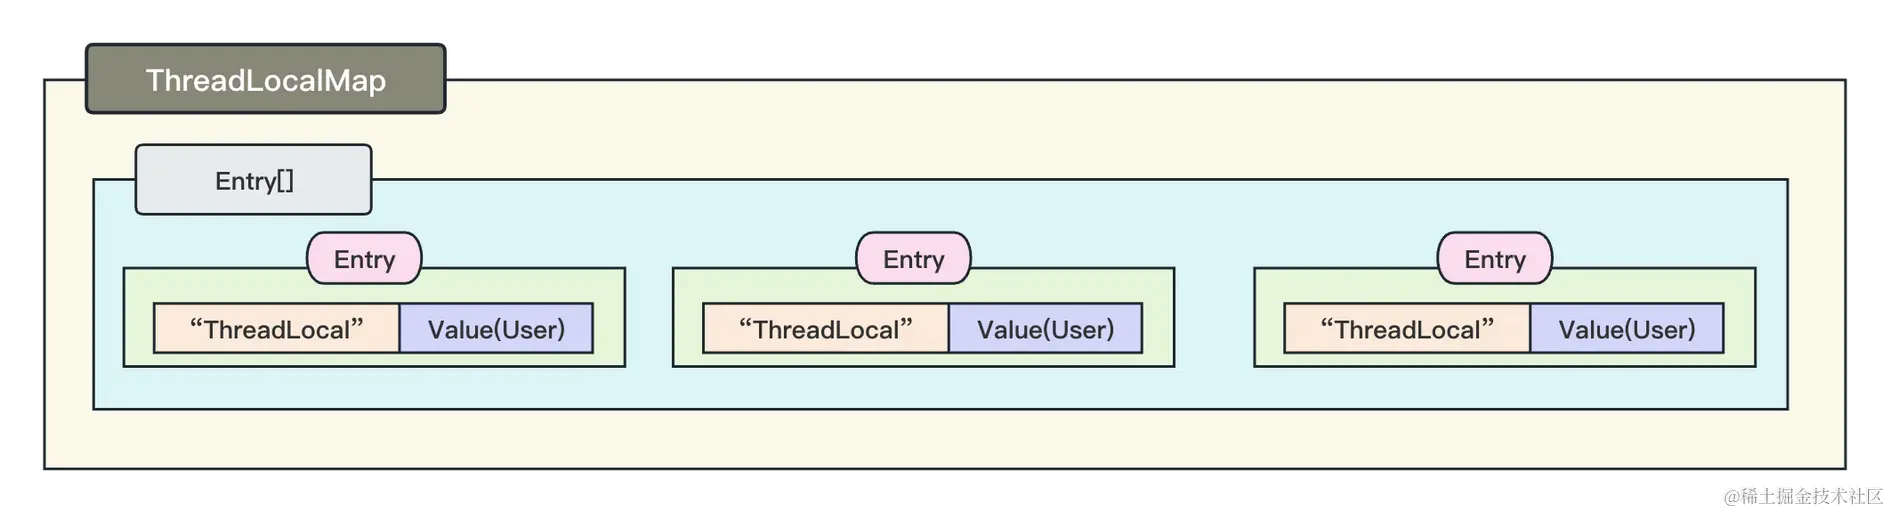 ThreadLocalMap存储结构.png